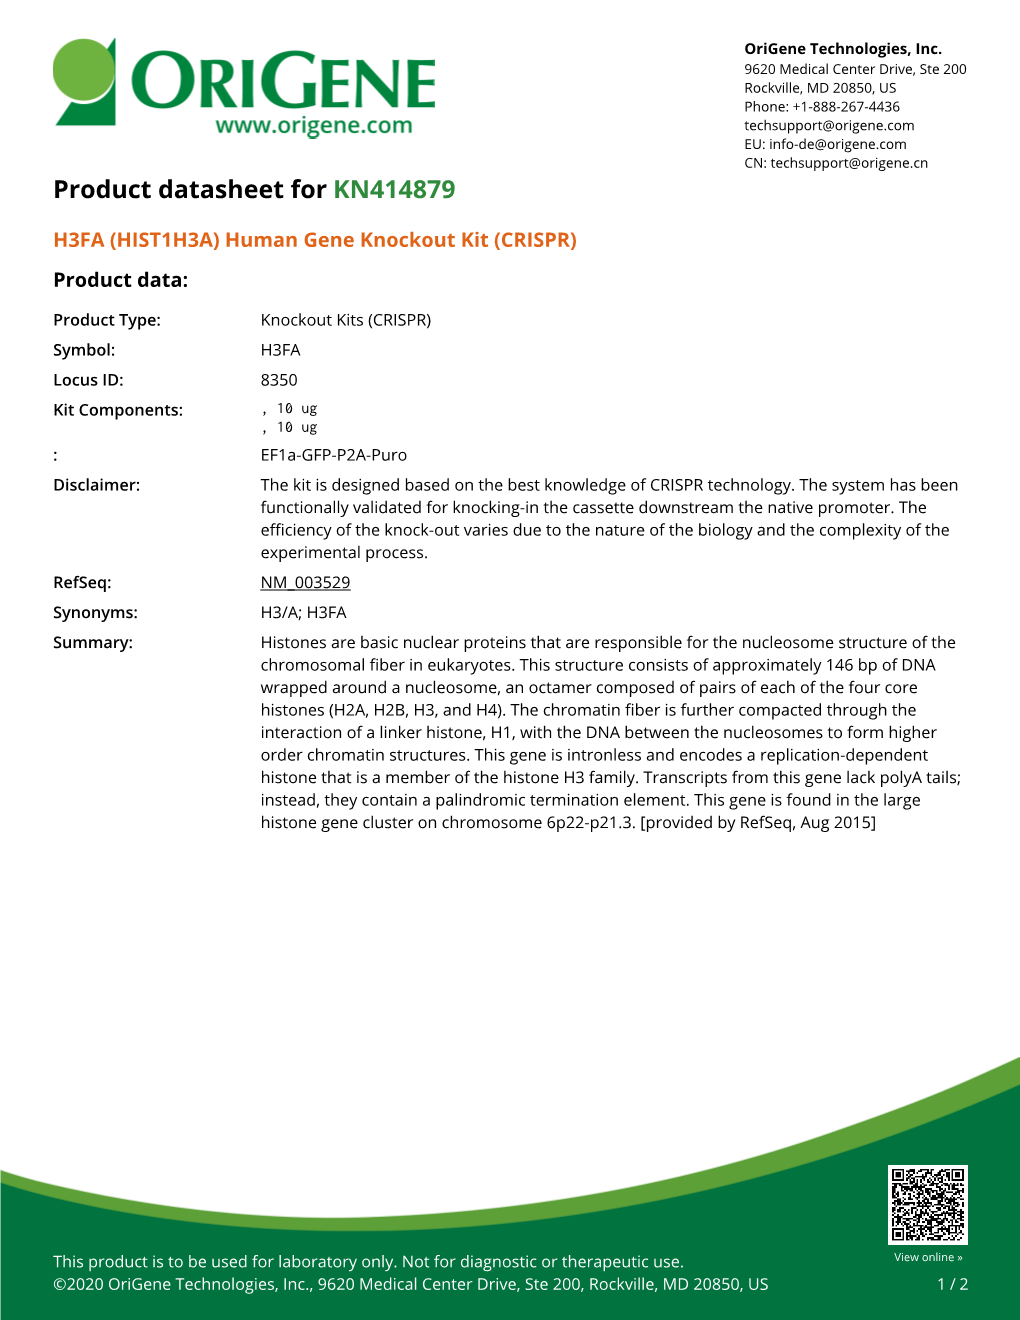 H3FA (HIST1H3A) Human Gene Knockout Kit (CRISPR) Product Data